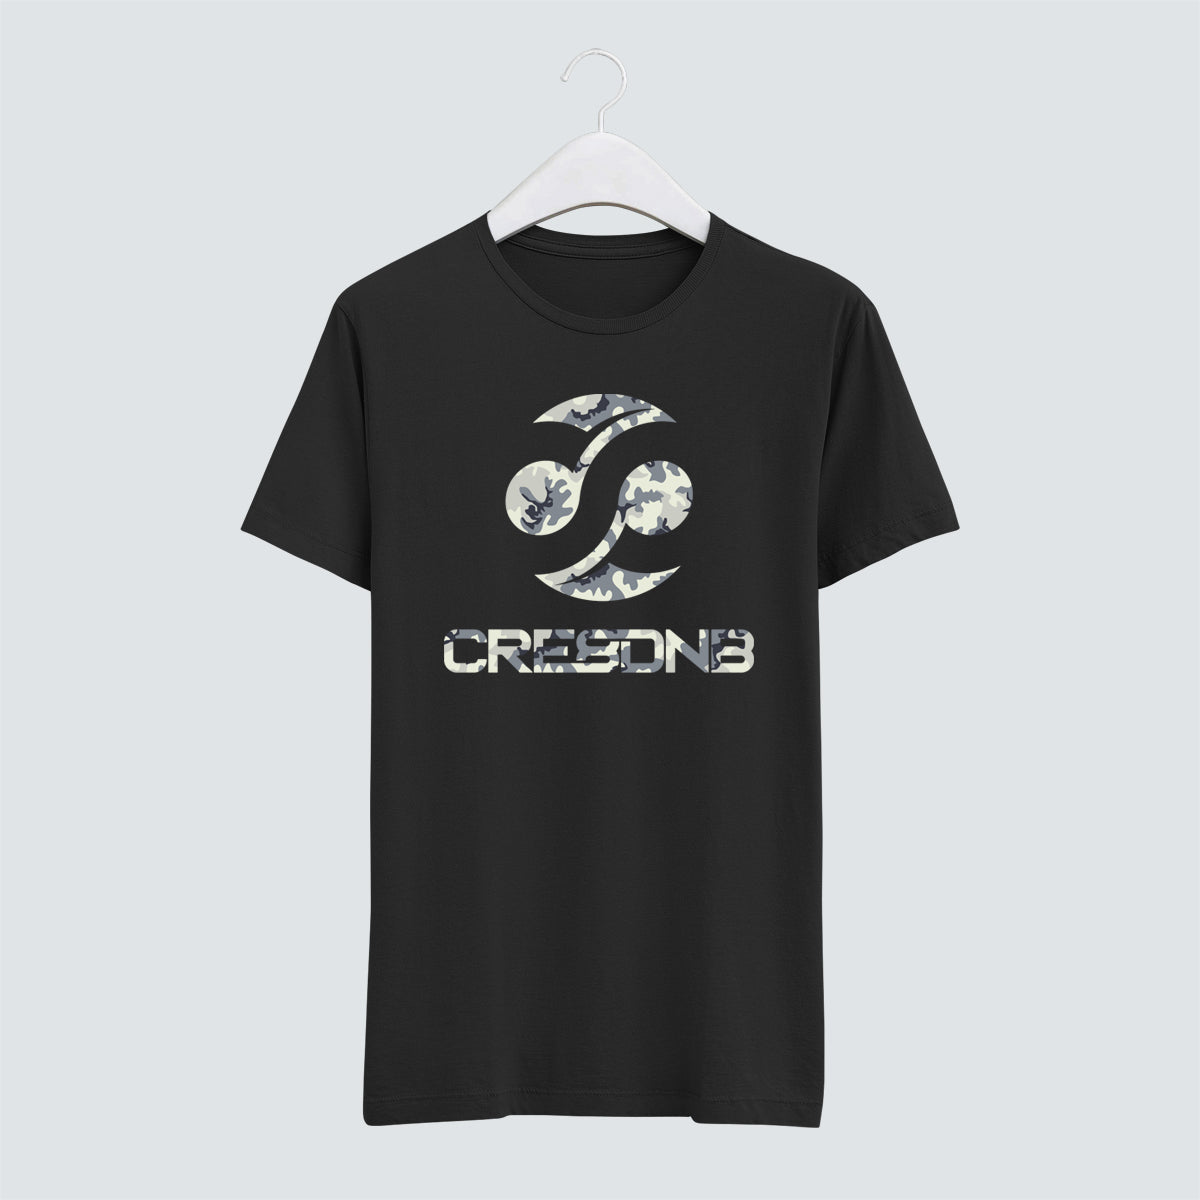 Cre8DnB Camo T-Shirt (Black)